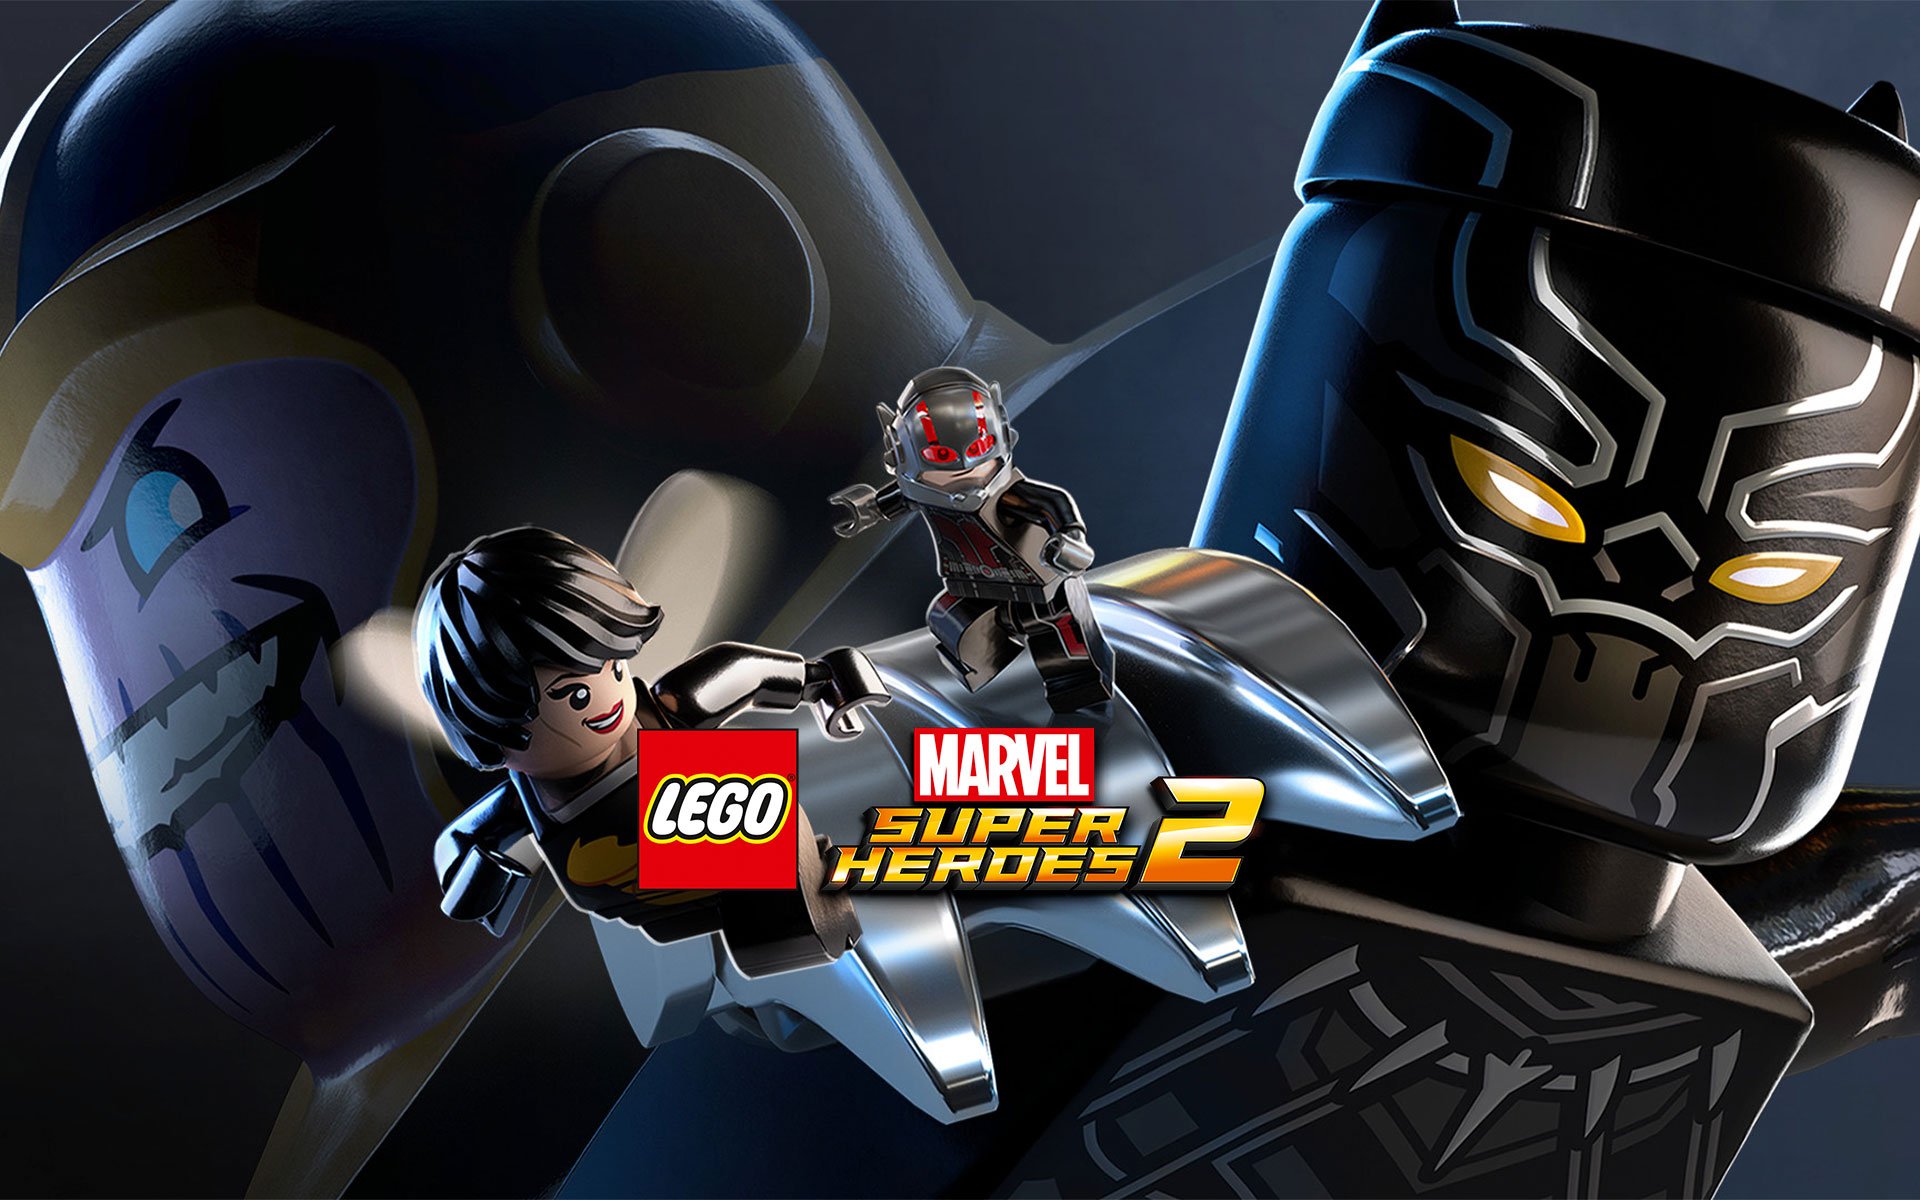 LEGO Marvel Super Heroes 2 - Season Pass - PC - Compre na Nuuvem